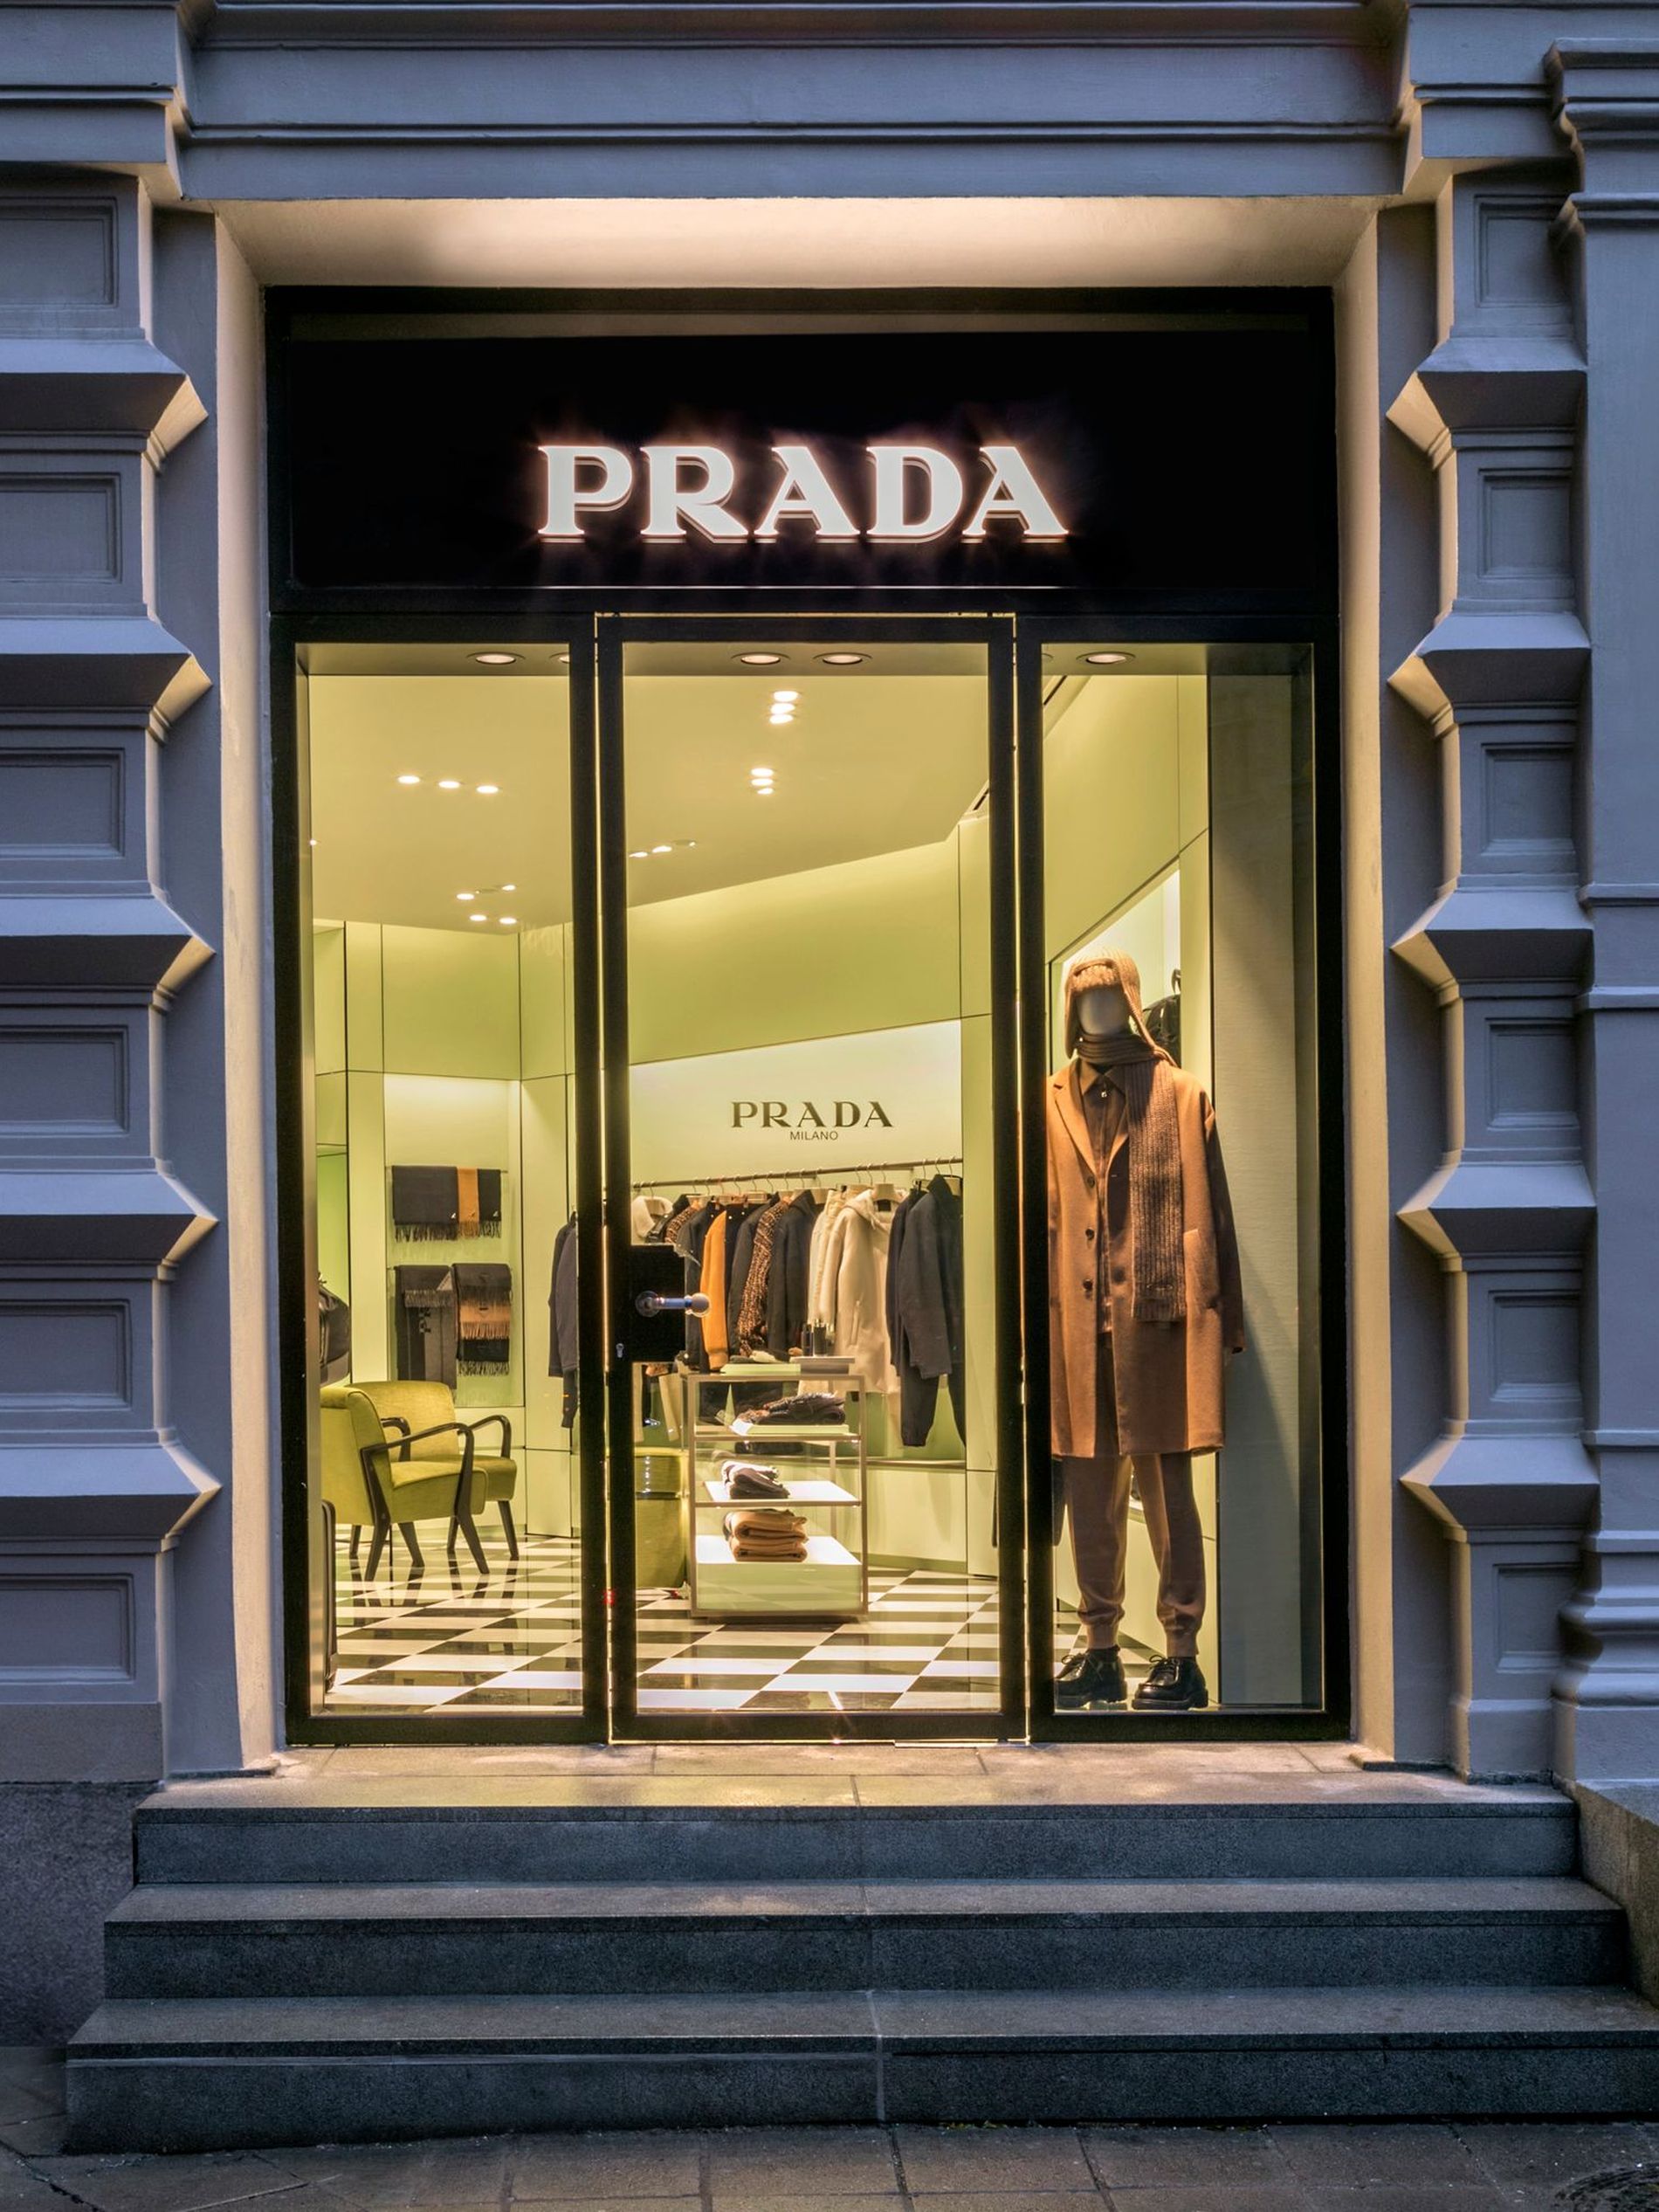 The entrance to Prada's new men's store in Stockholm